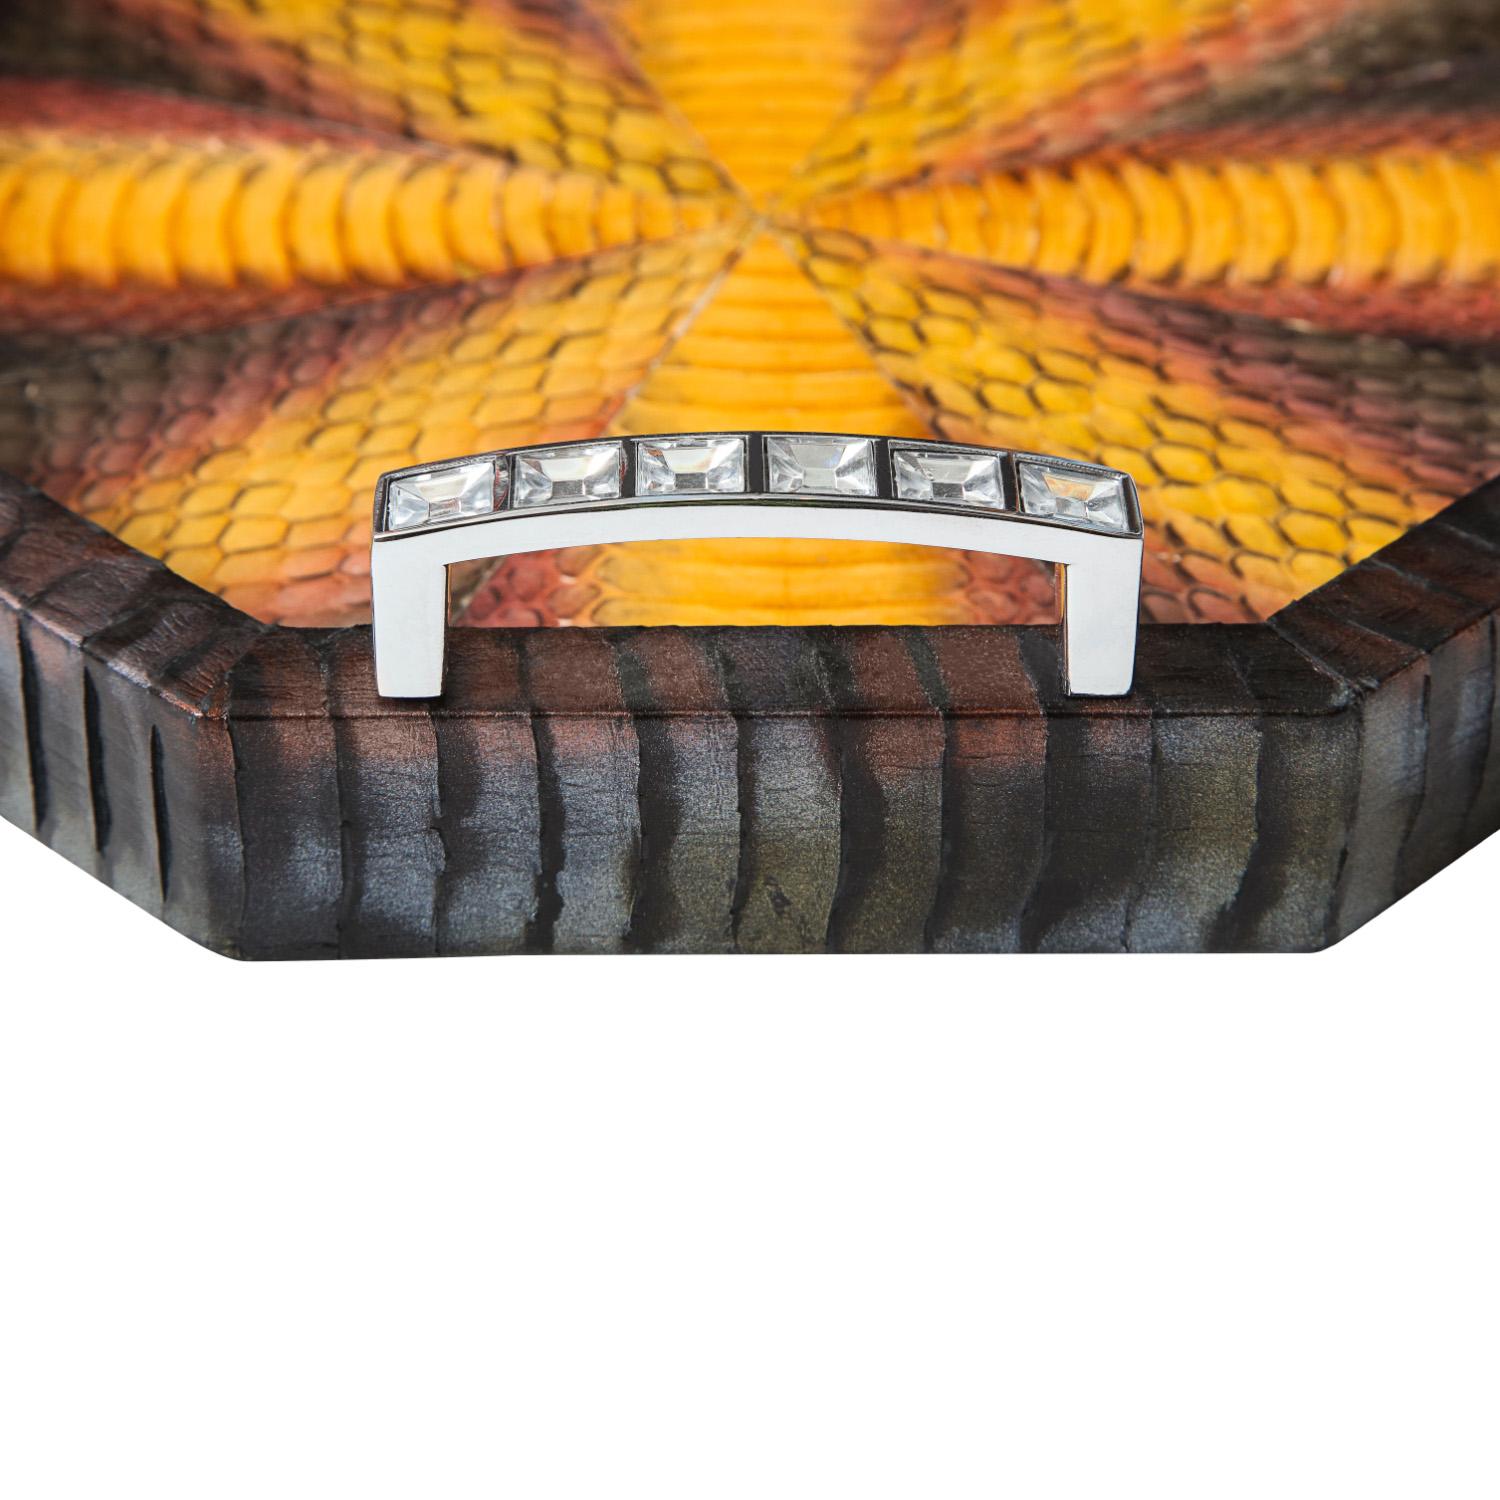 Contemporary Lobel Originals Octagonal Tray in Multicolor Python with Rhinestones - New For Sale